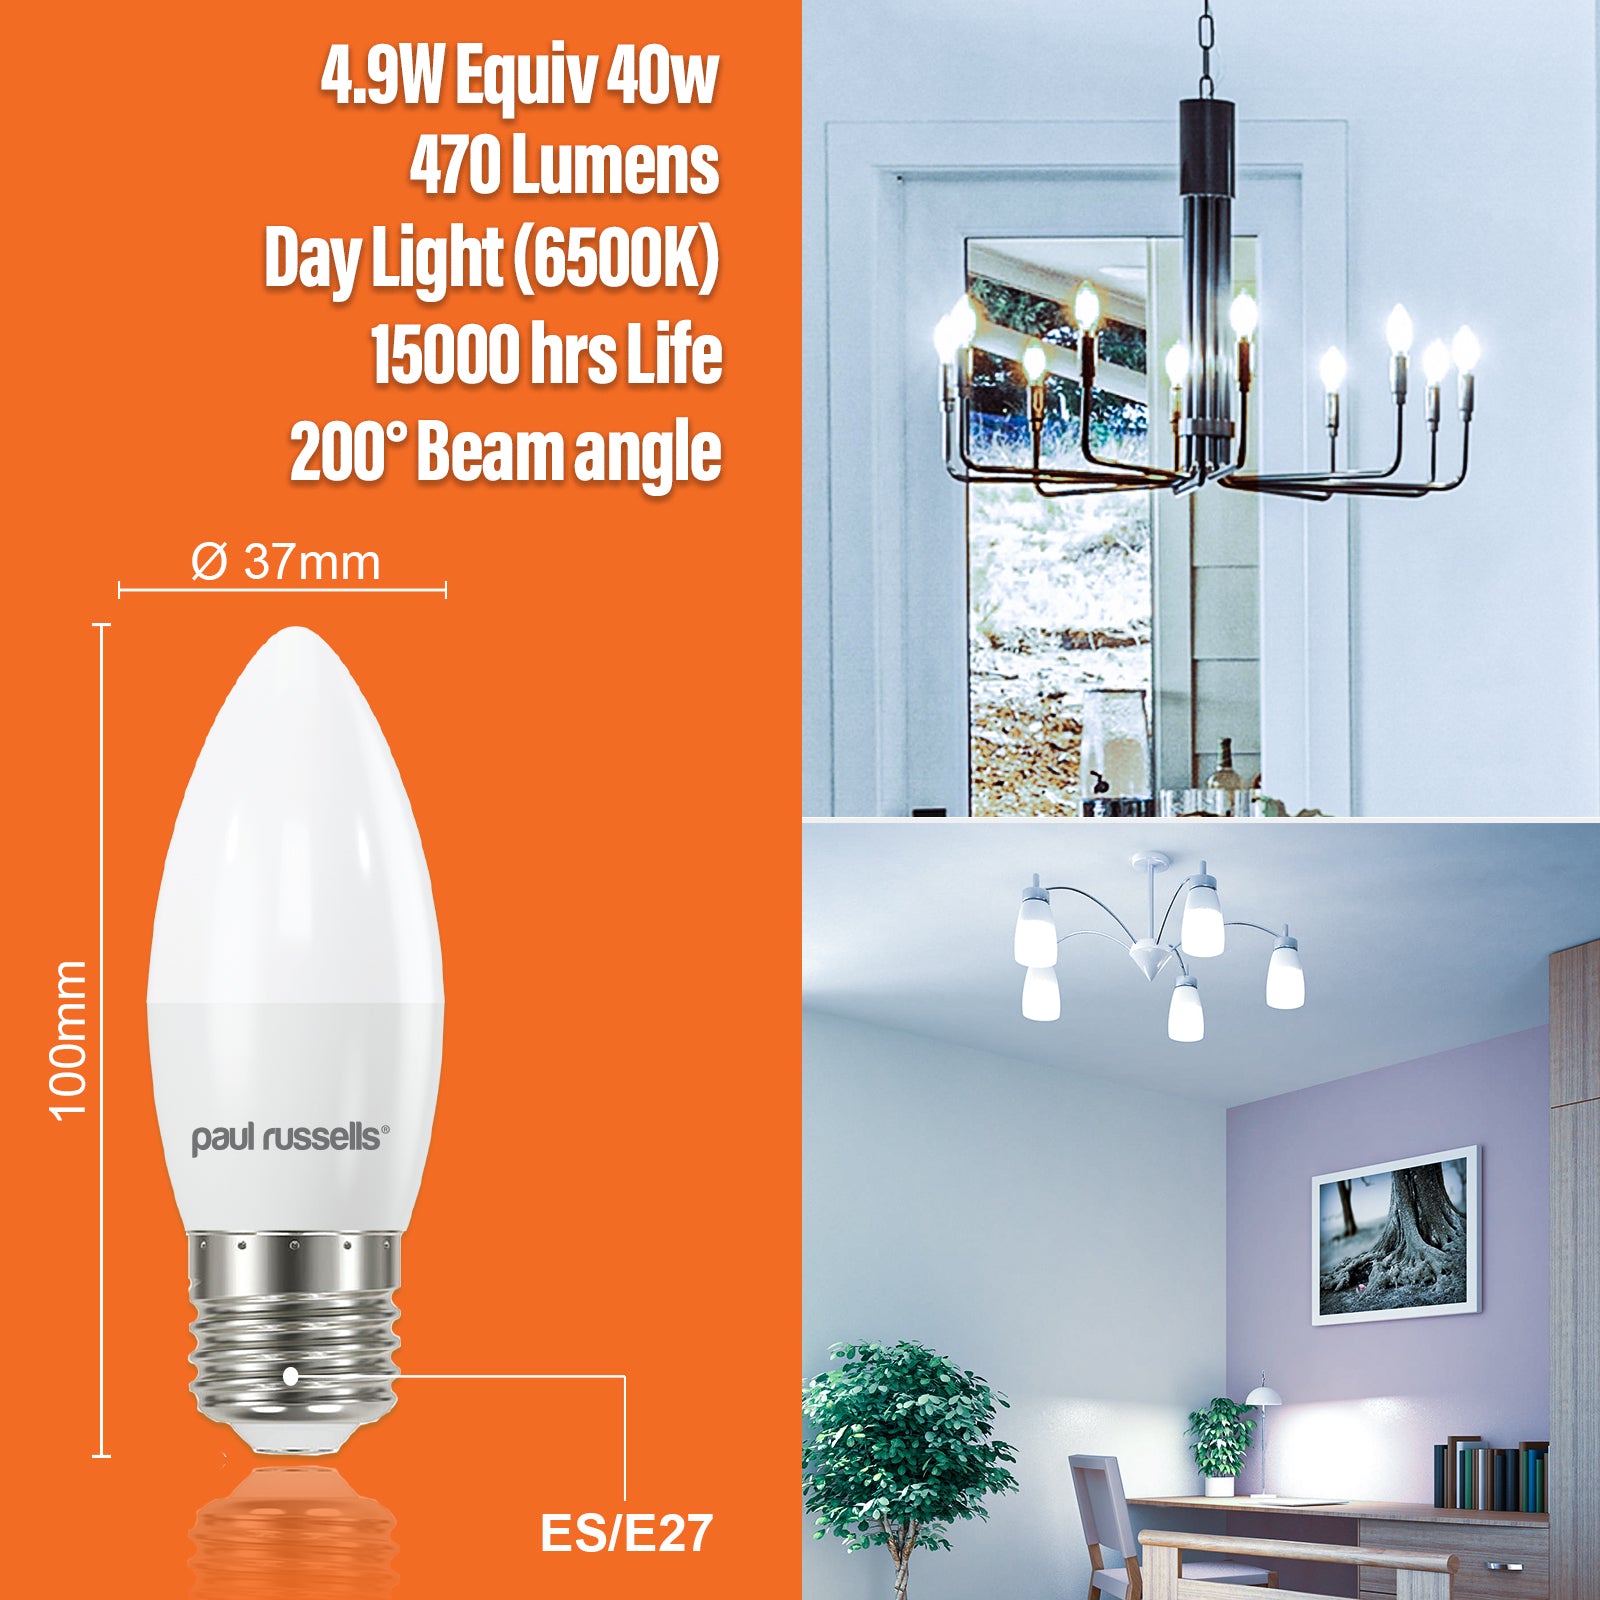 LED Candle 4.9W (40w), ES/E27, 470 Lumens, Day Light(6500K), 240V